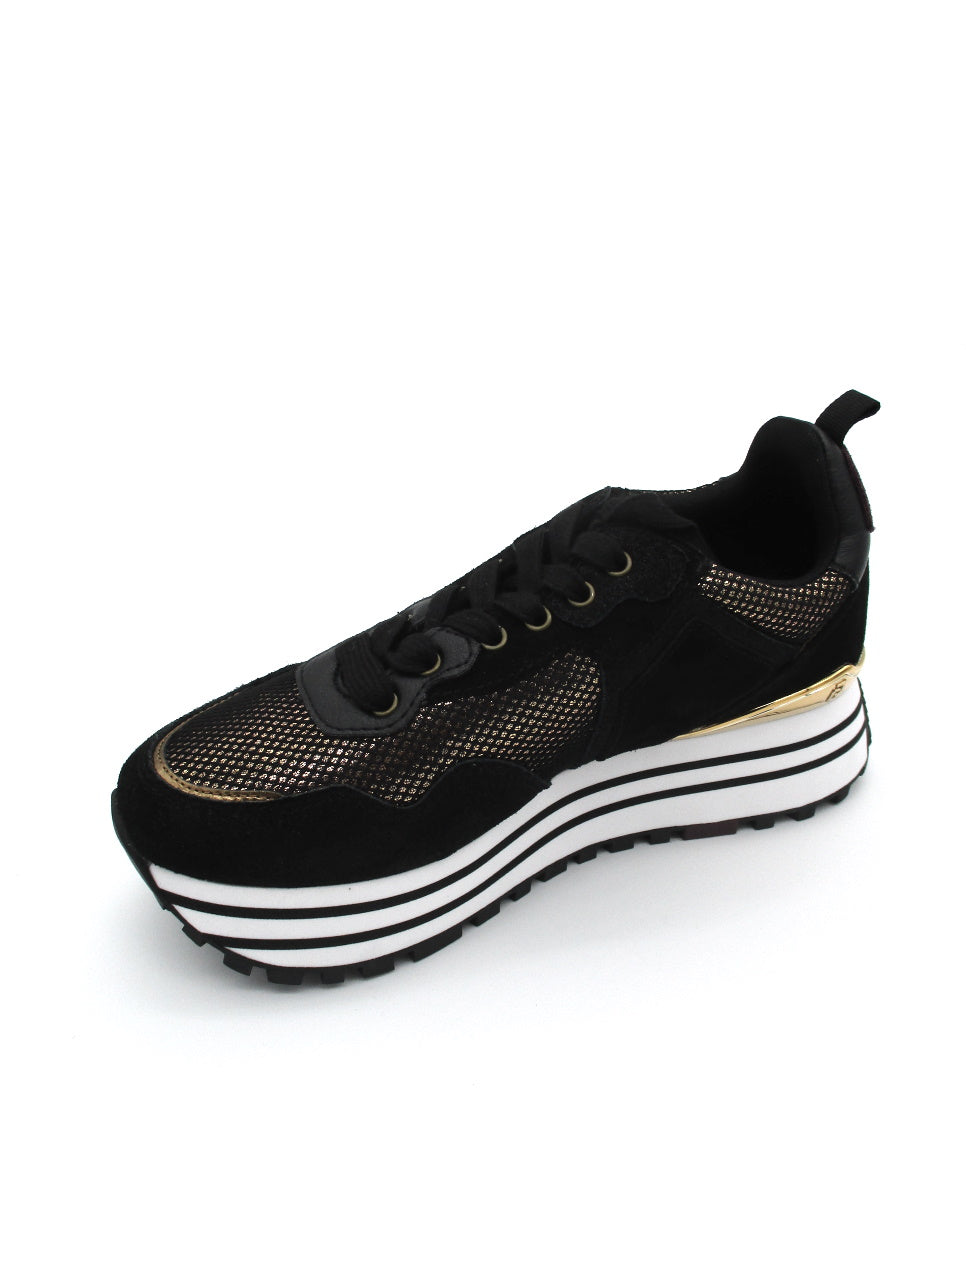 Sneaker LIU JO Maxi Wonder 01 Black